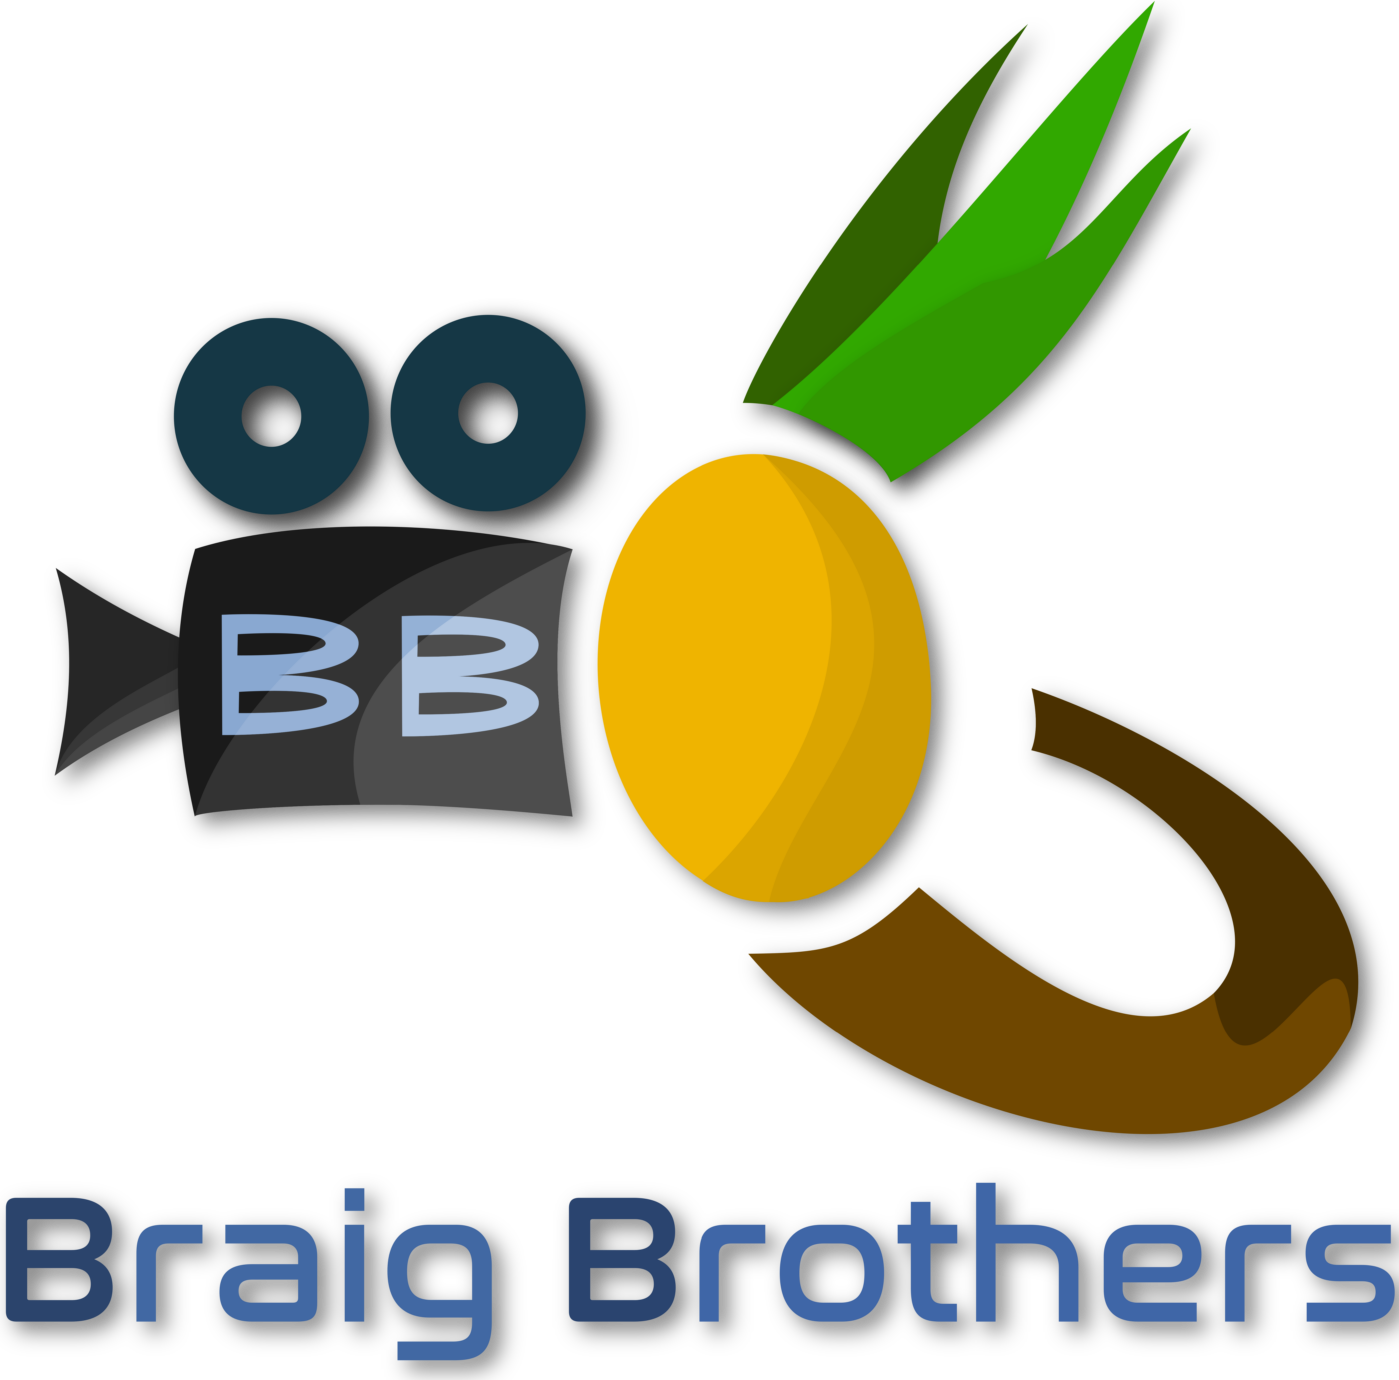 BB Logo with shades